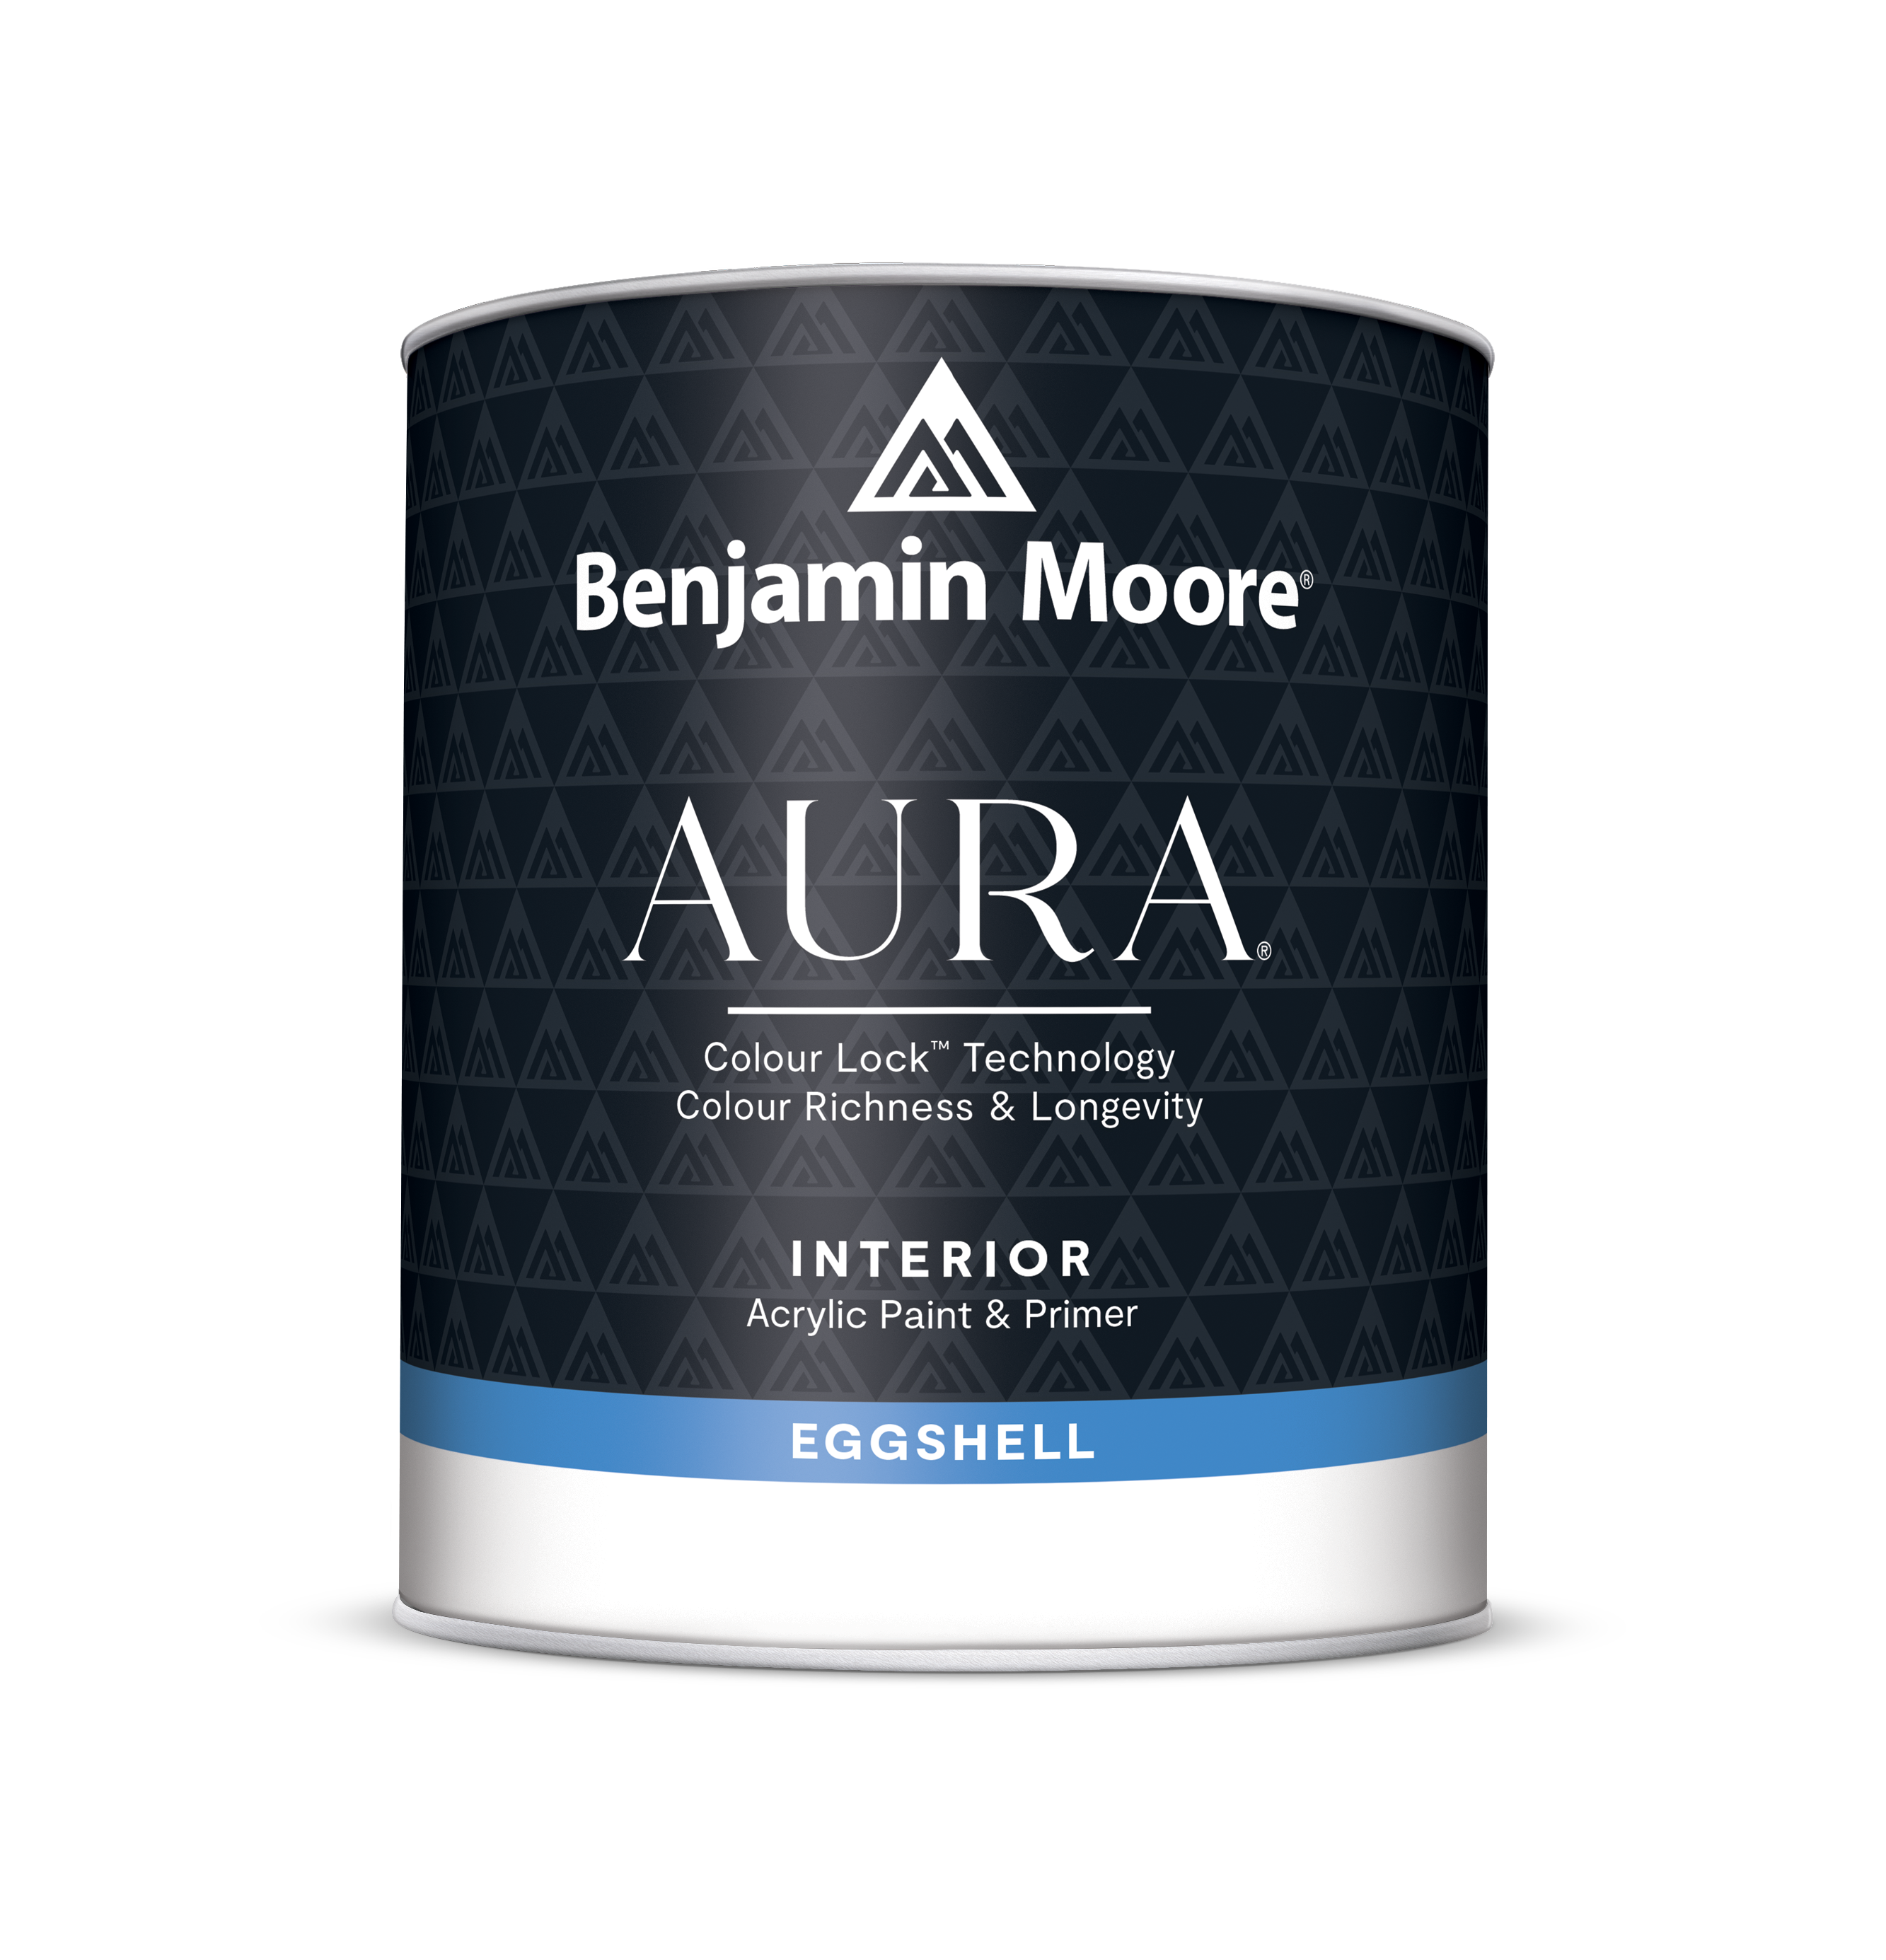 Benjamin Moore AURA® Waterborne Interior Paint bucket in Eggshell finish